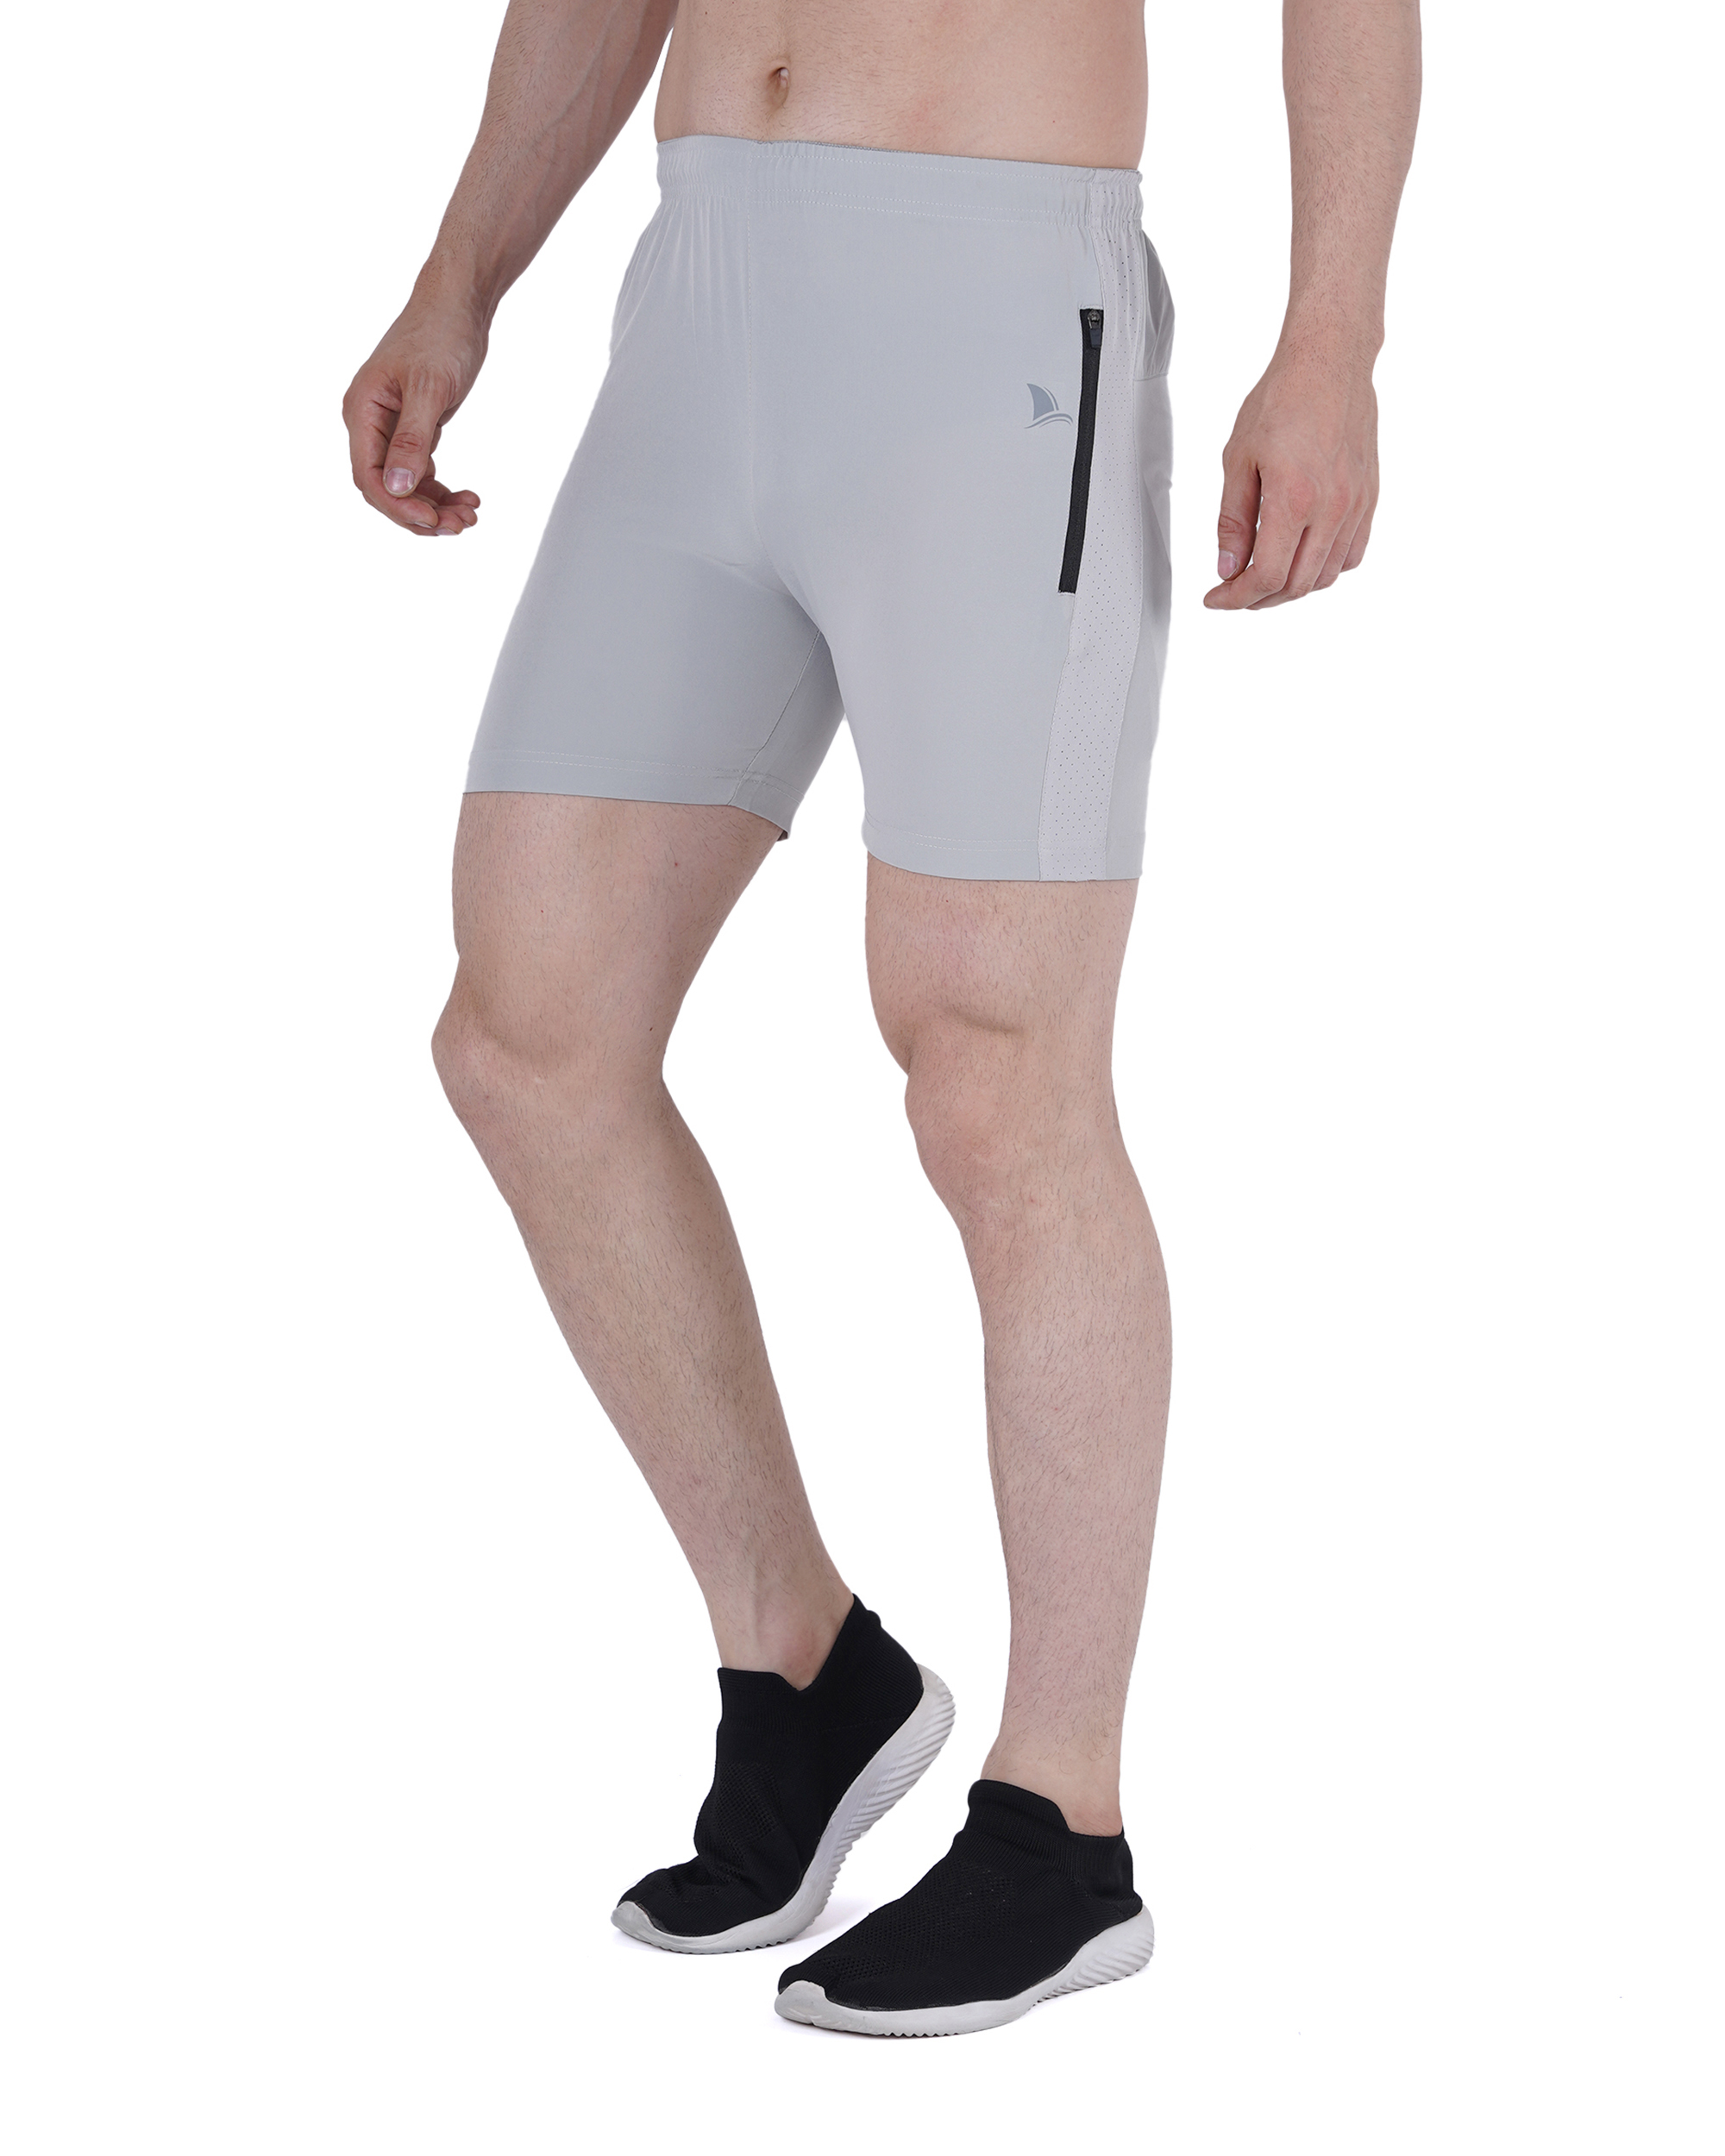 Buy NAVYFIT Men's Running shorts